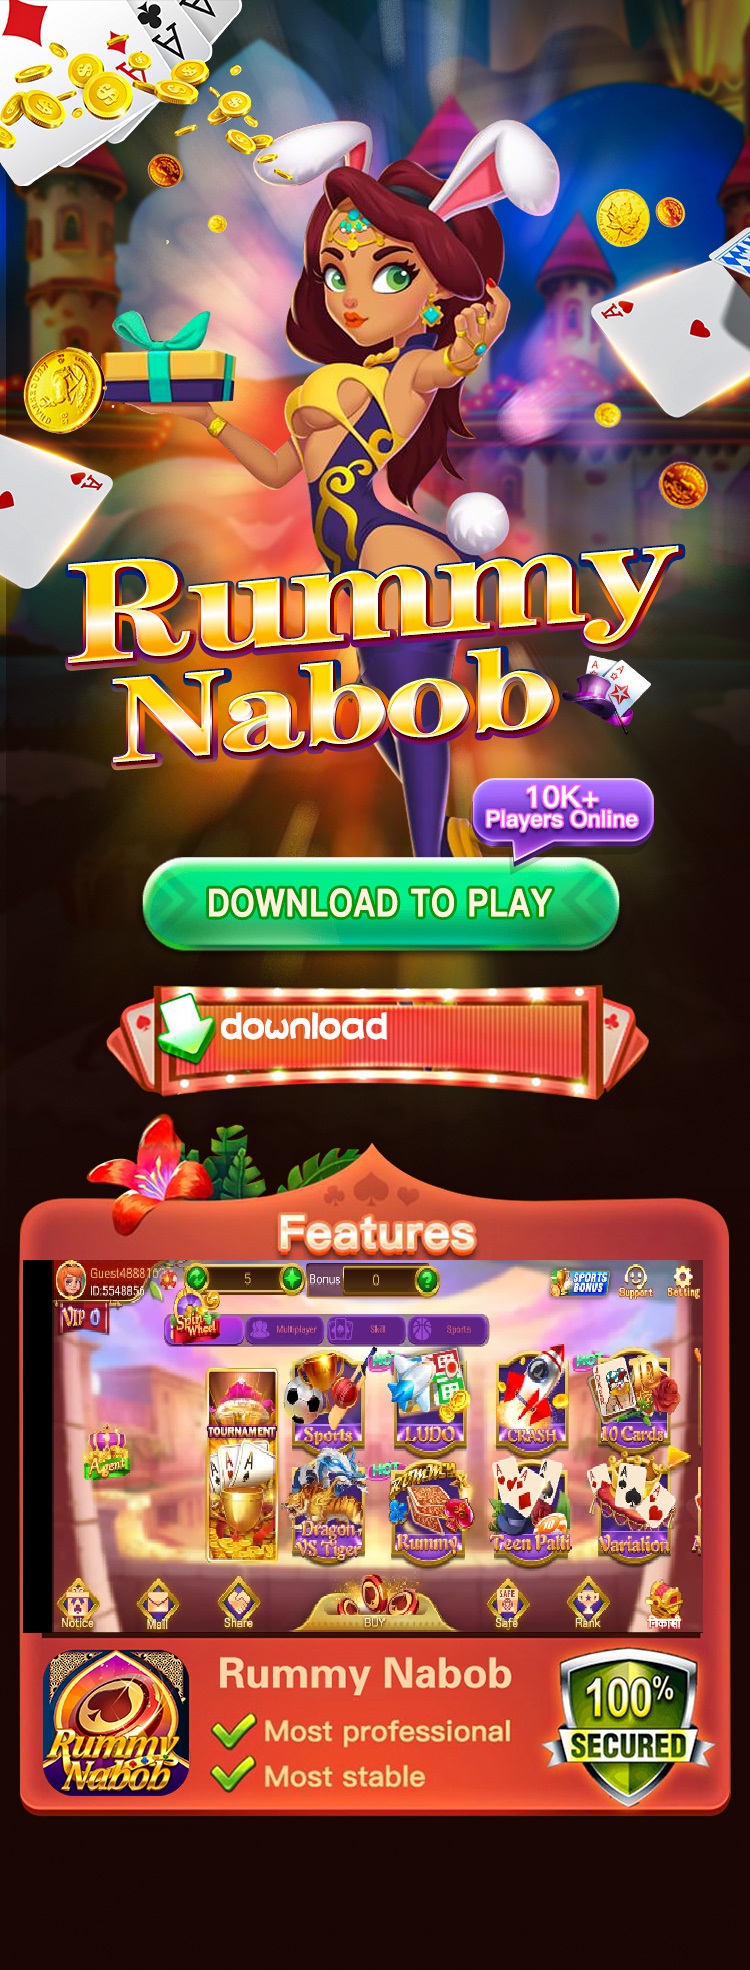 Rummy Nabob 51 Bonus